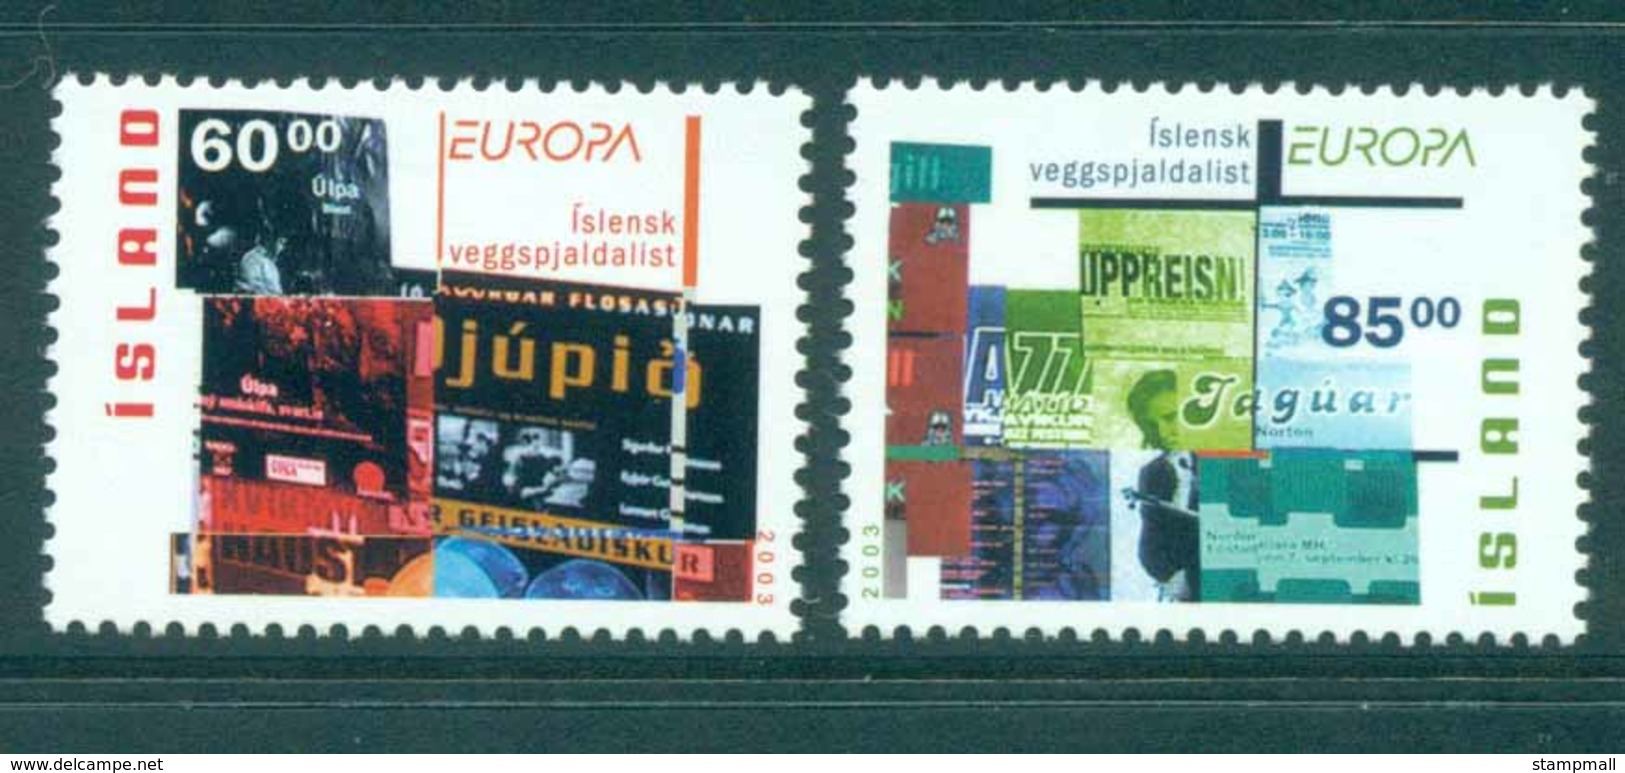 Iceland 2003 Europa MUH Lot32517 - Unused Stamps